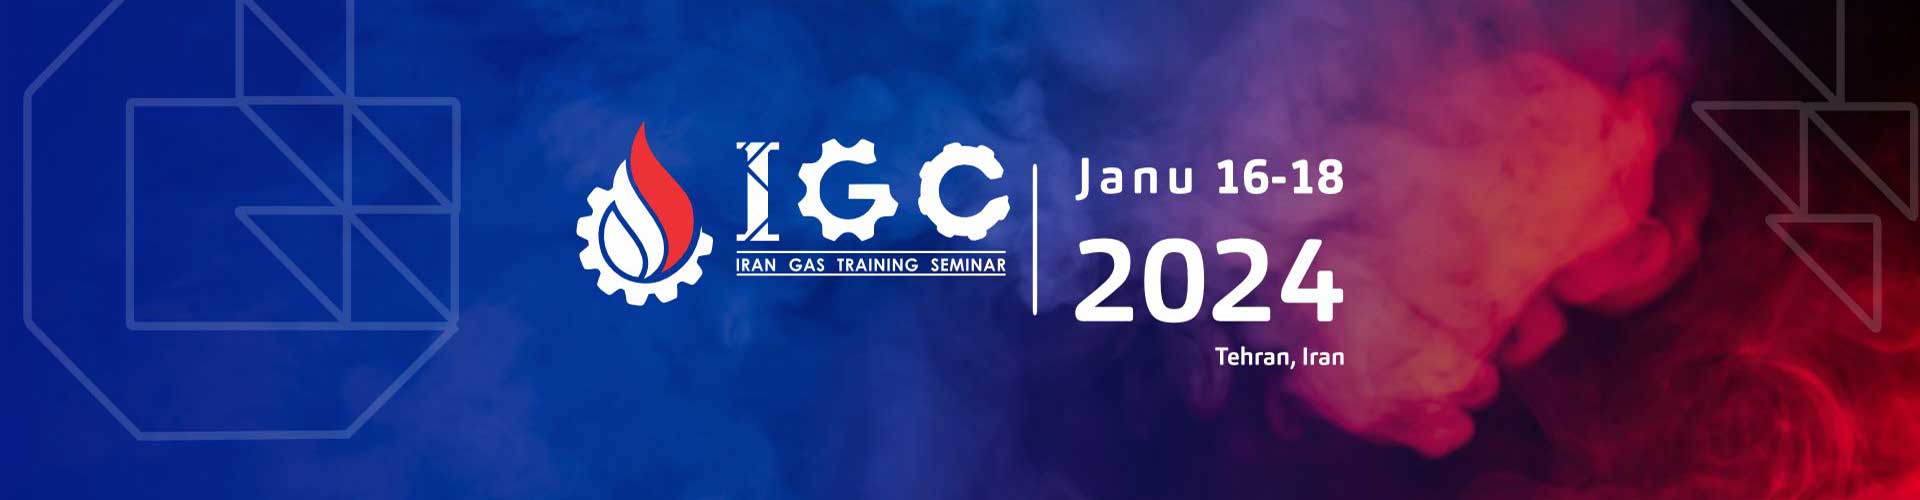 The second Iran Gas Training Seminar